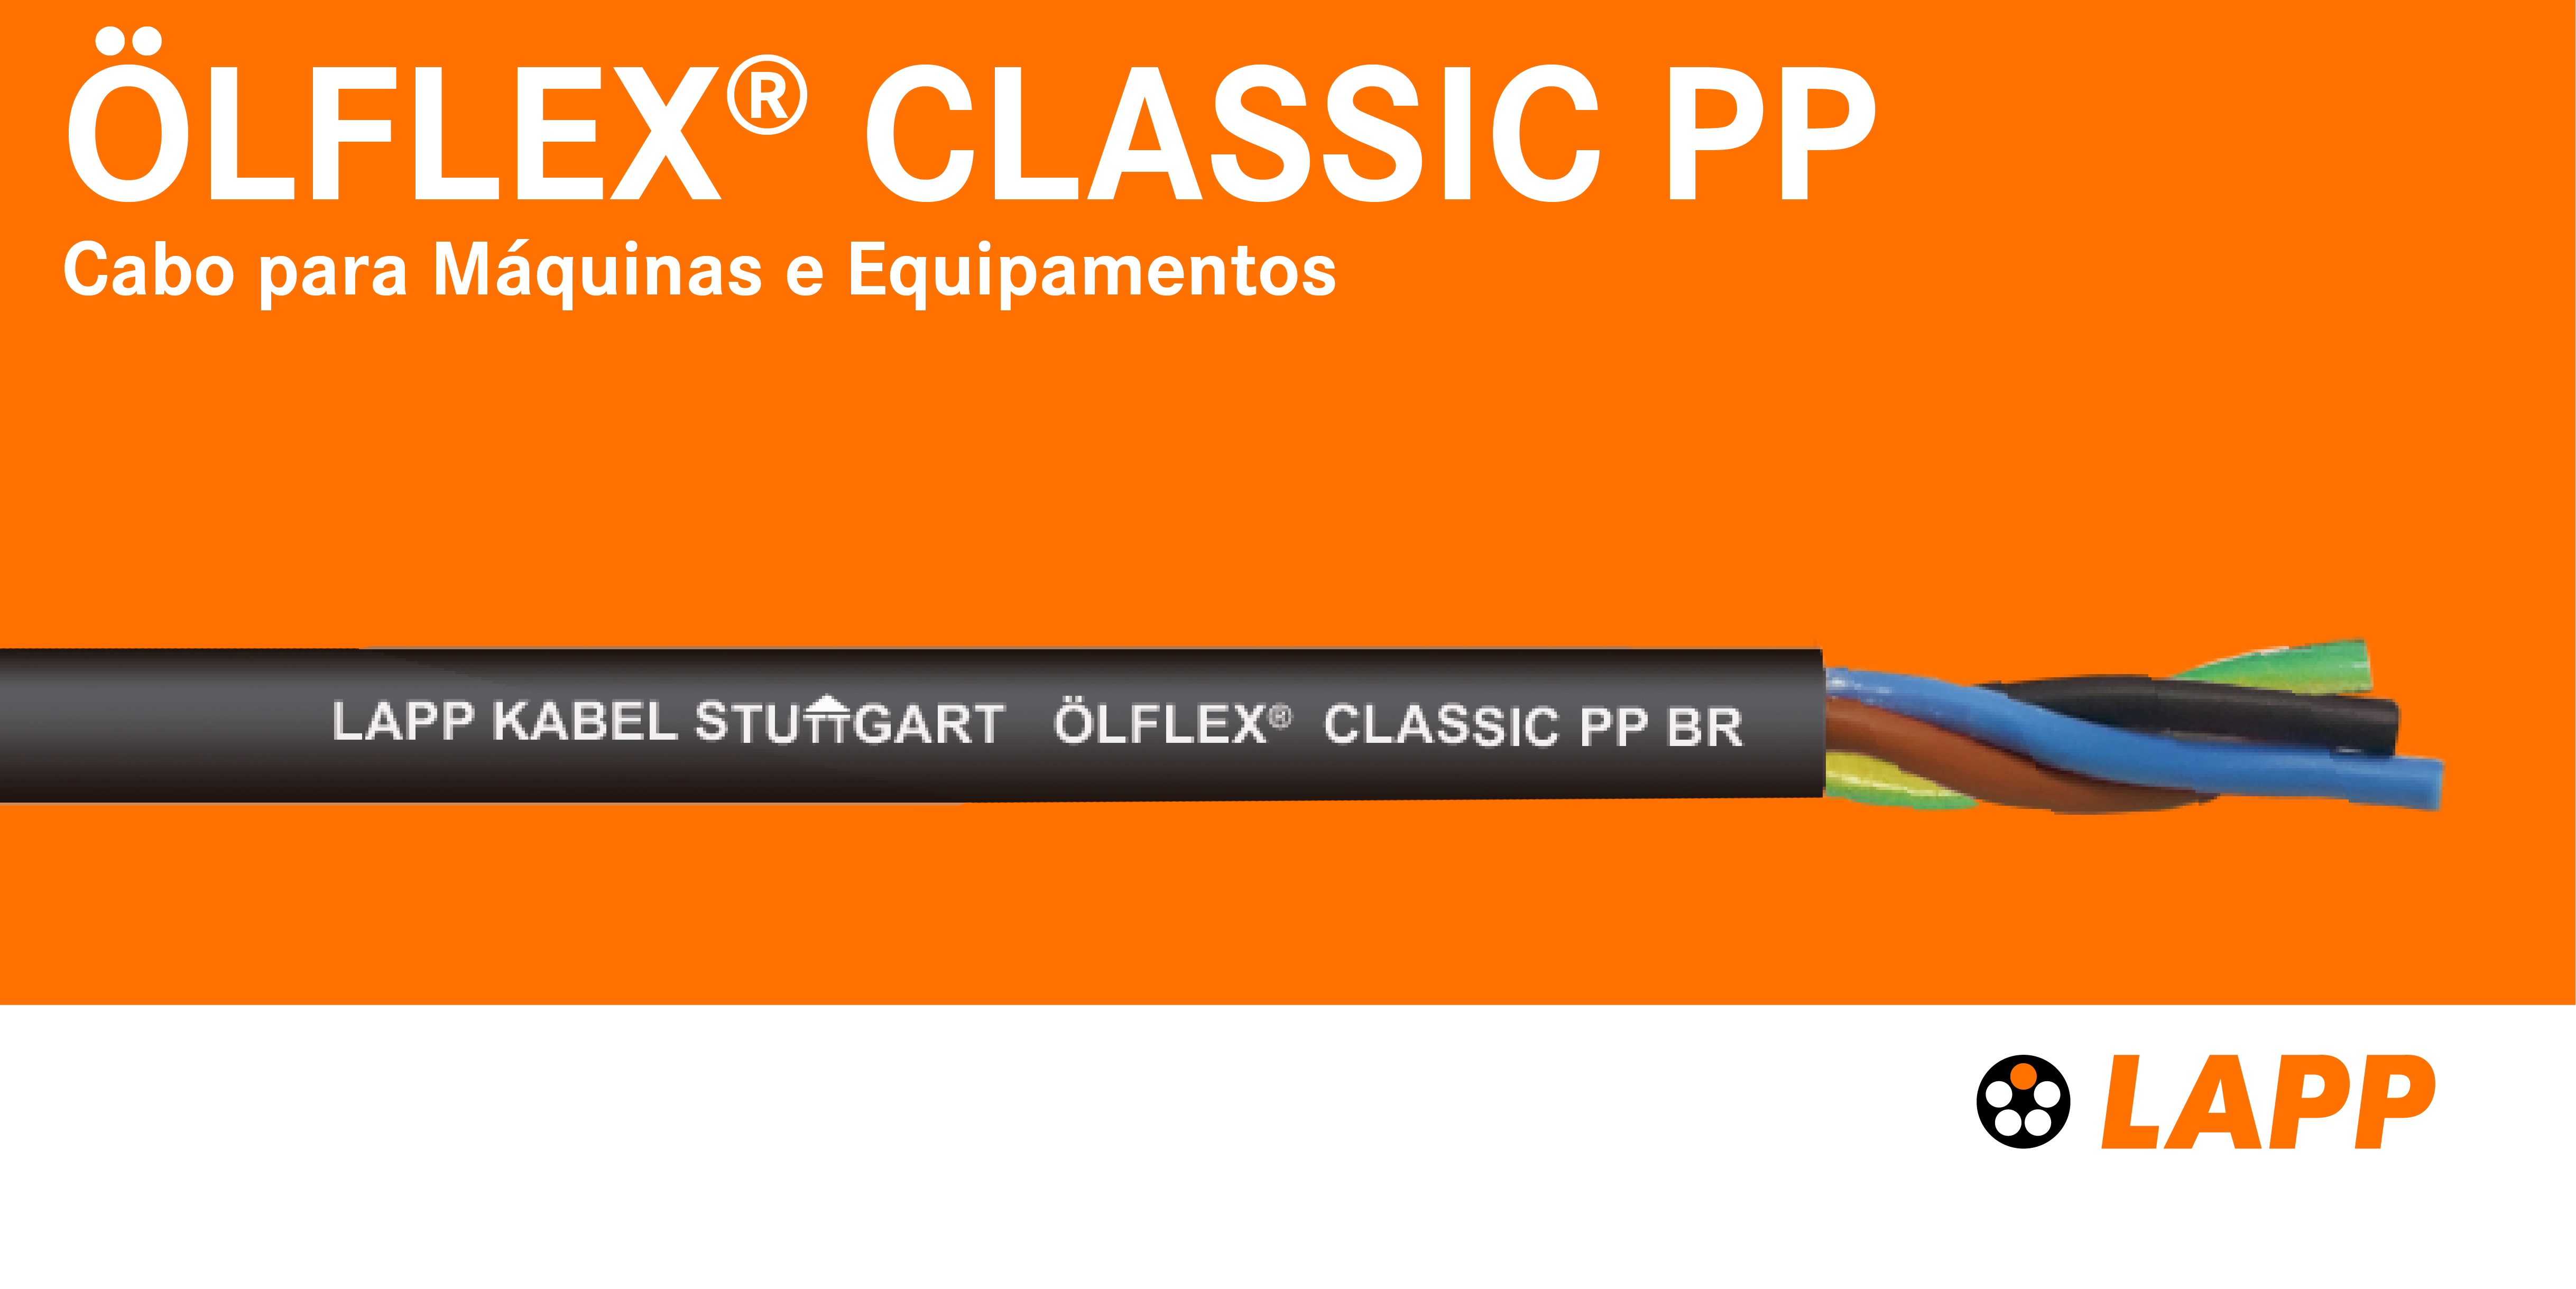 Banner OLFLEX R CLASSIC PP